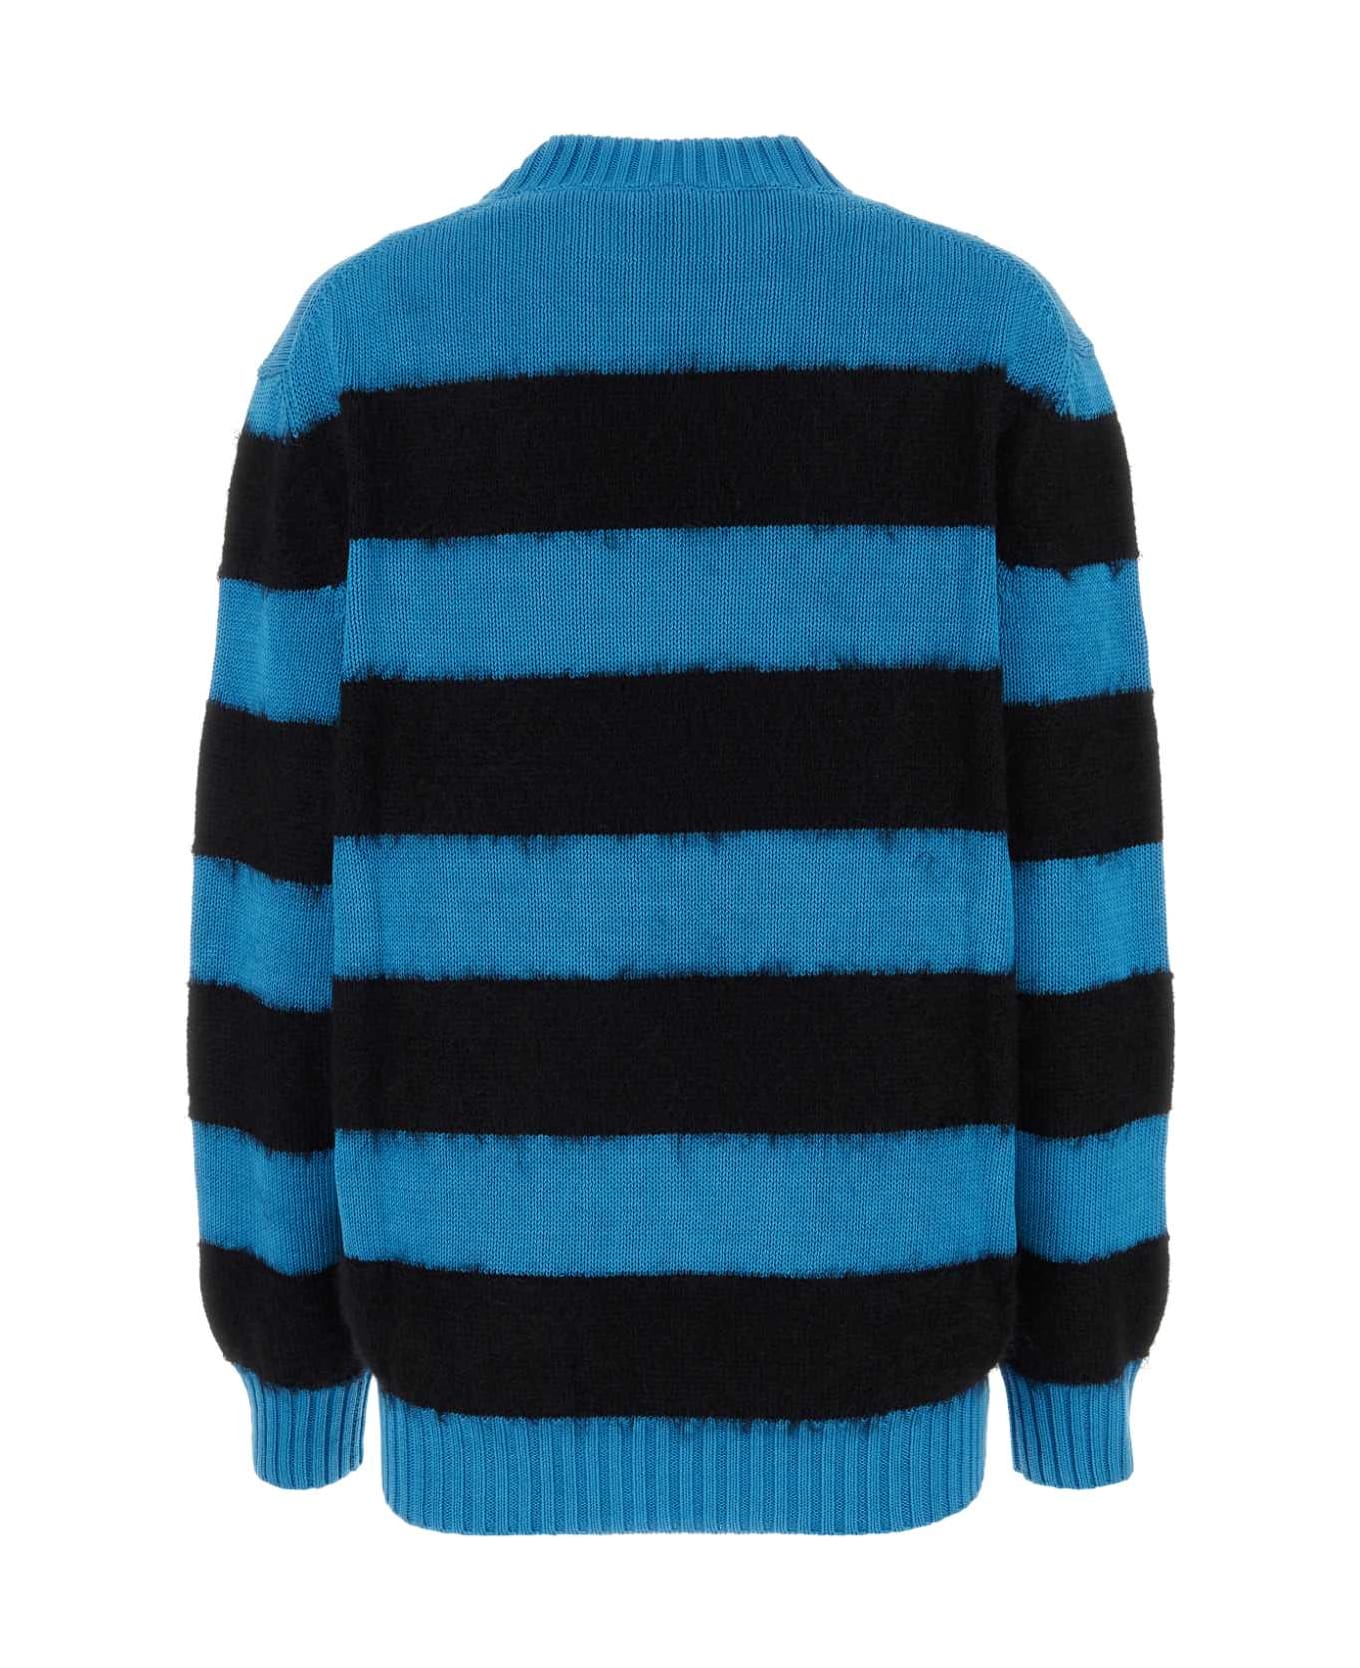 Alexander McQueen Embroidered Cotton Blend Sweater - LAPISBLUEBLACK